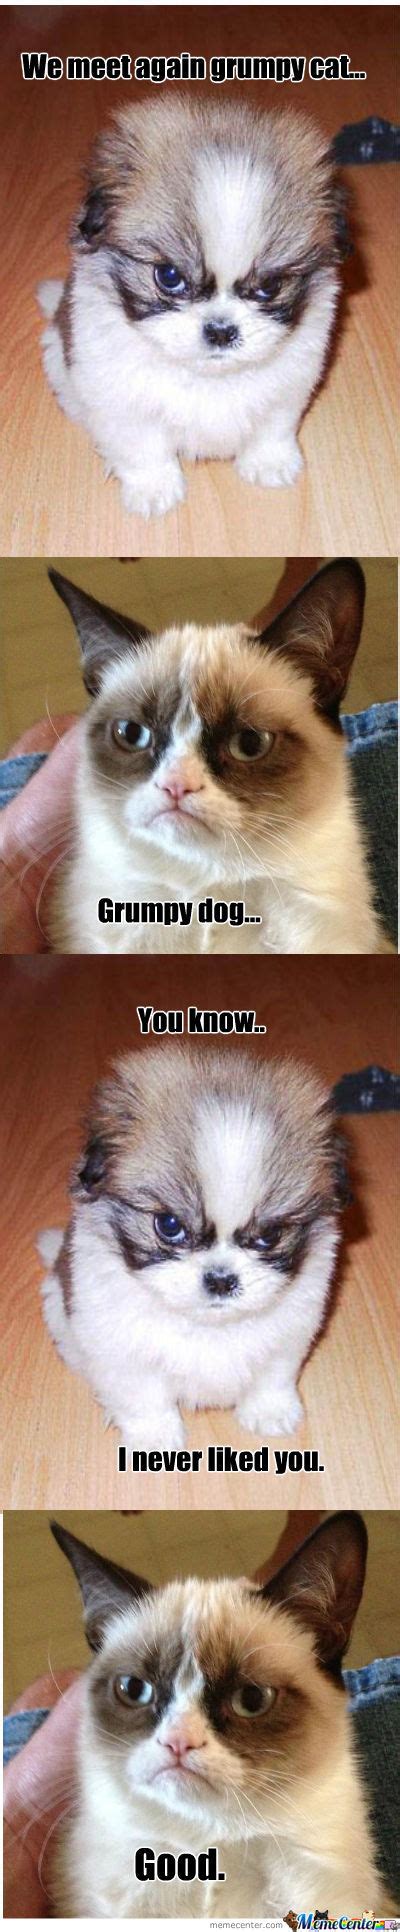 Grumpy Dog Vs Grumpy Cat By Recyclebin Meme Center